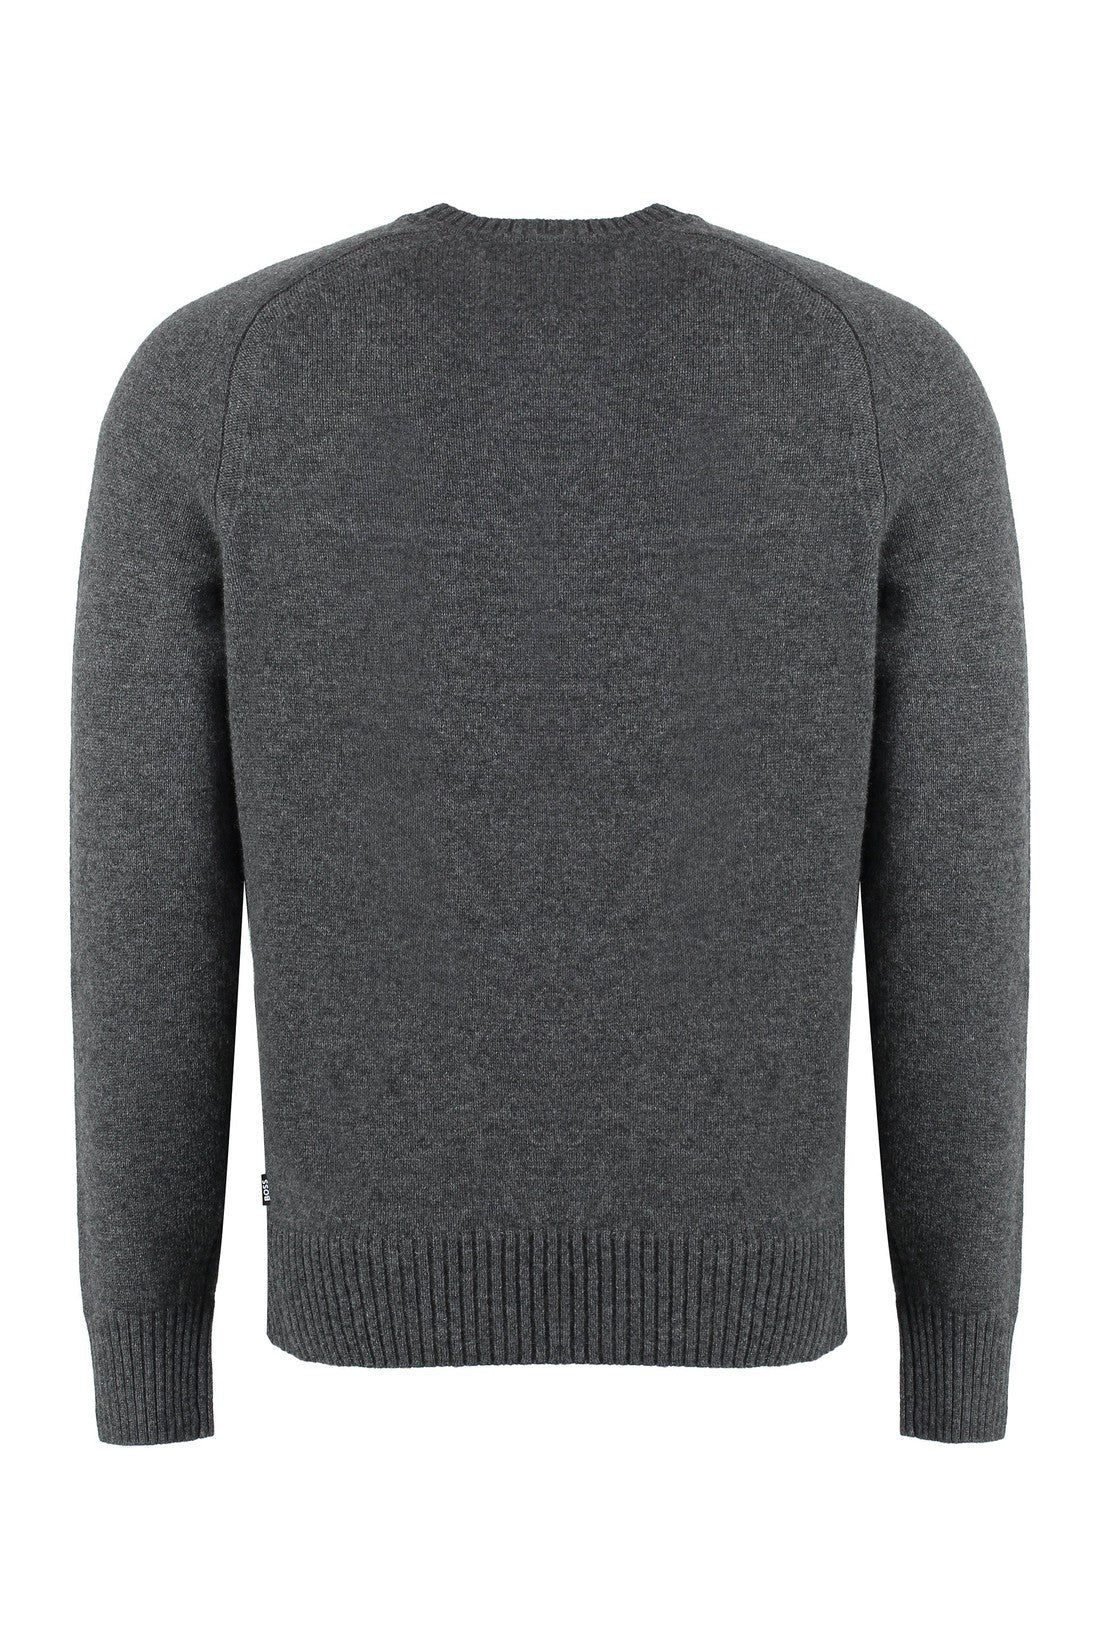 BOSS-OUTLET-SALE-Crew-neck cashmere sweater-ARCHIVIST